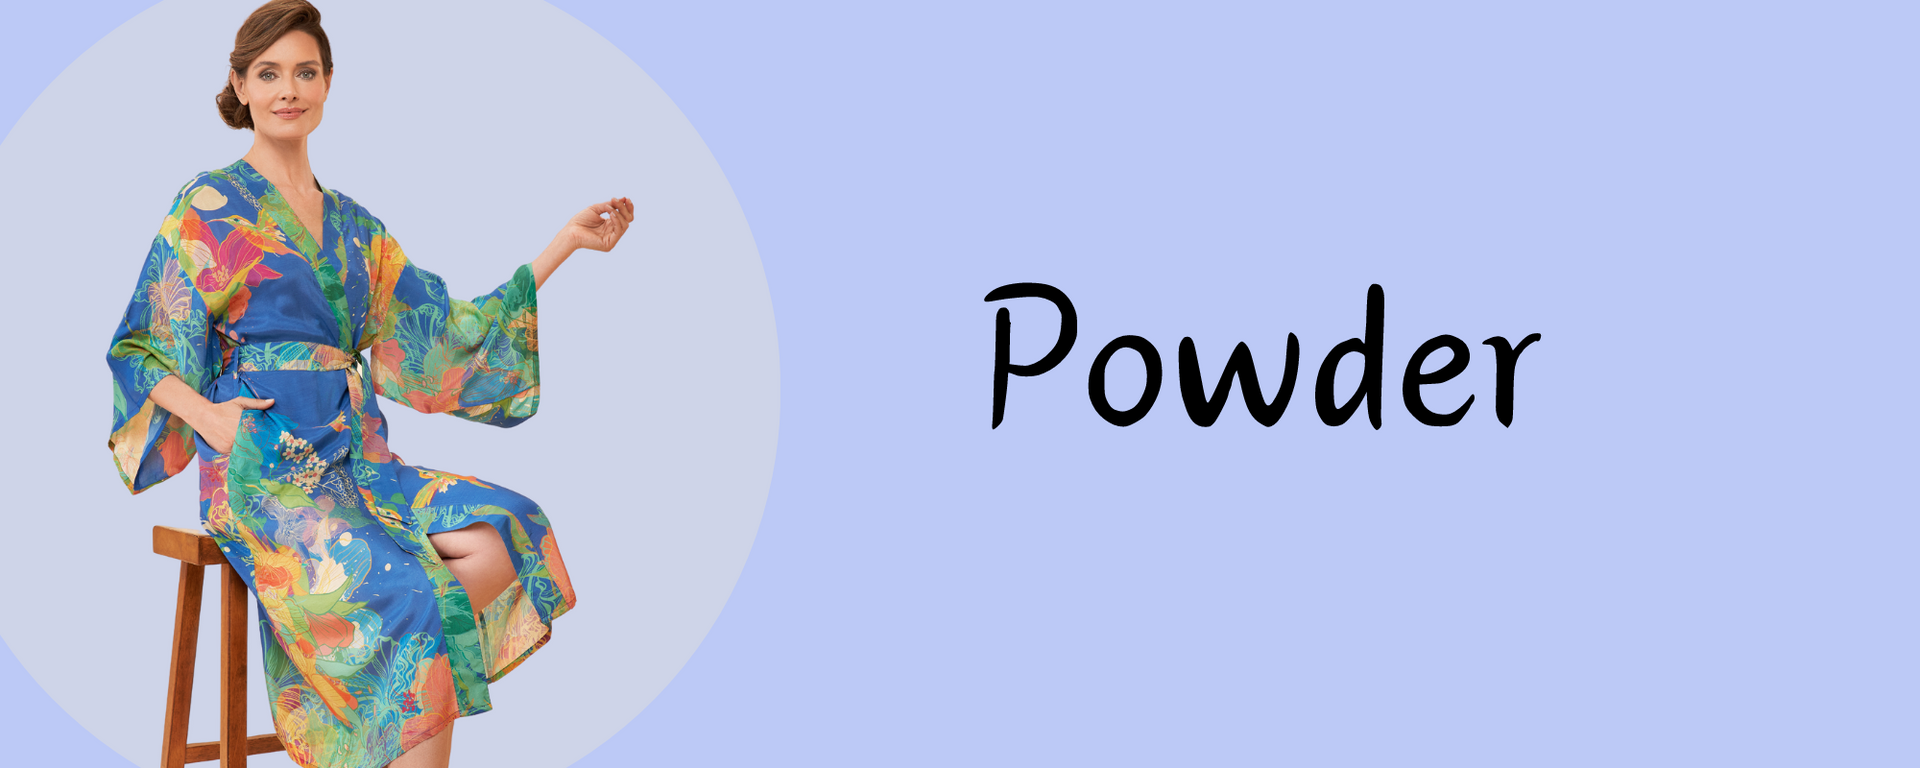 Powder Design - Powder Hats, Powder Socks, Powder Headbands, Powder Scarves and Powder Gifts